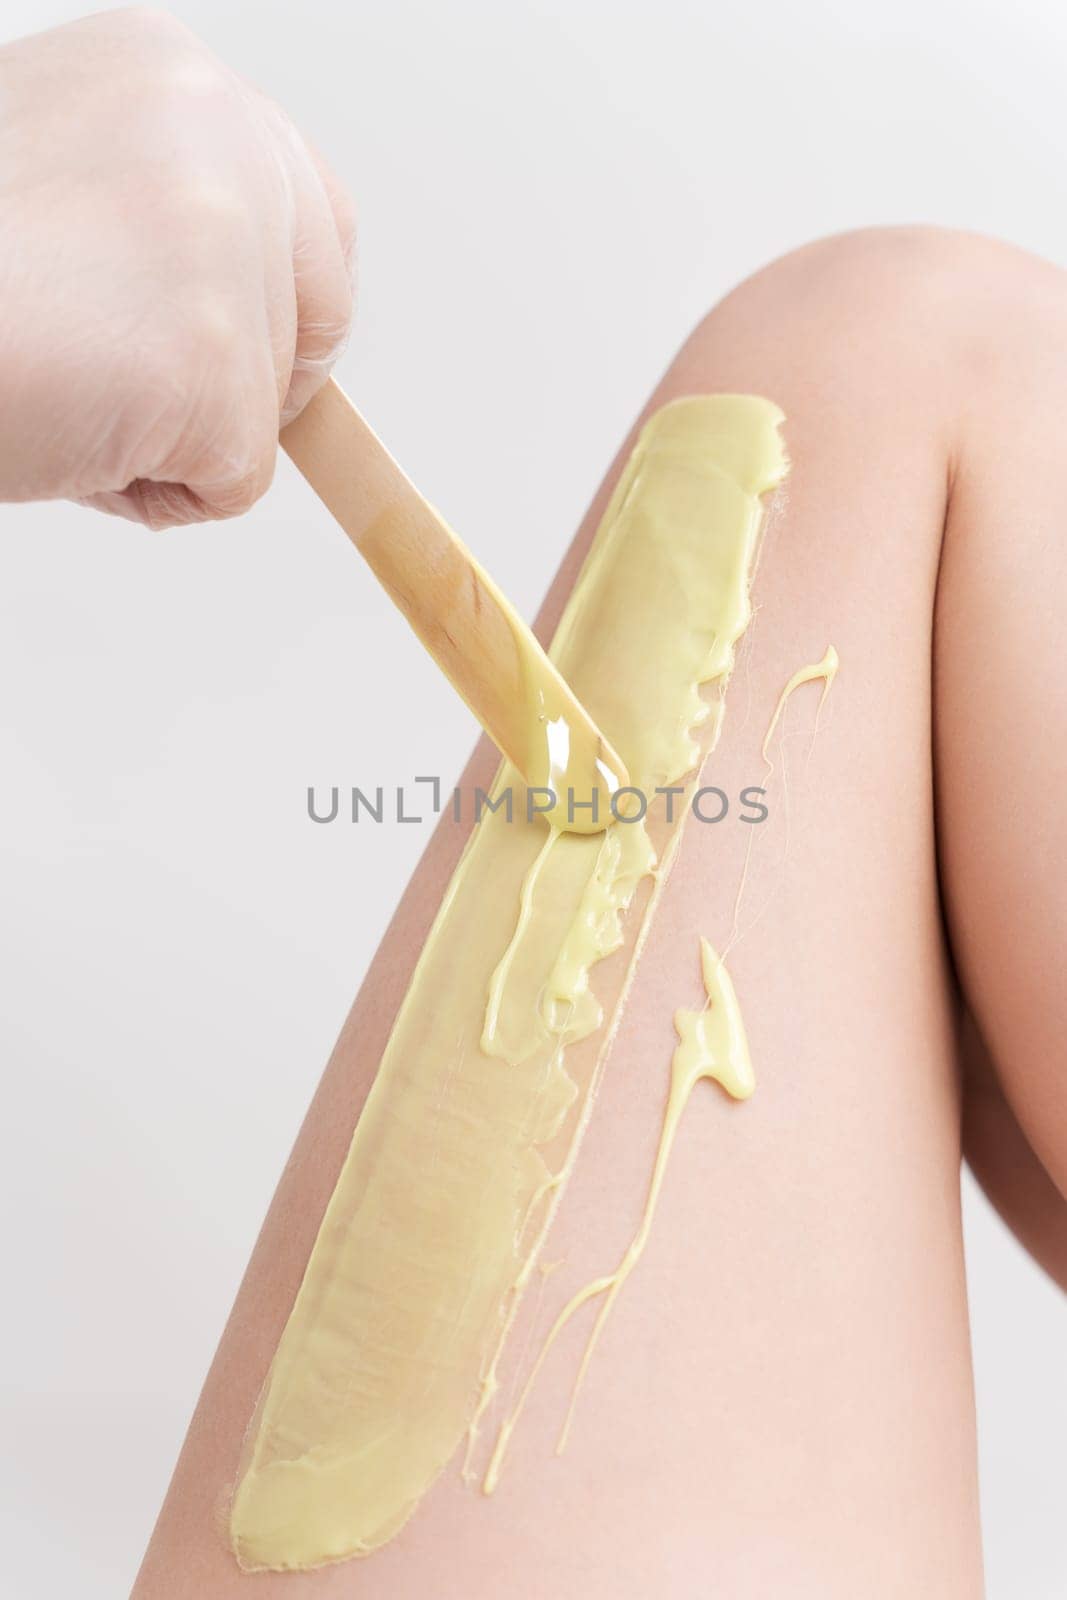 Closeup hand in glove applying hot wax on woman leg using spatula. Professional depilation procedure by Alexander-Piragis